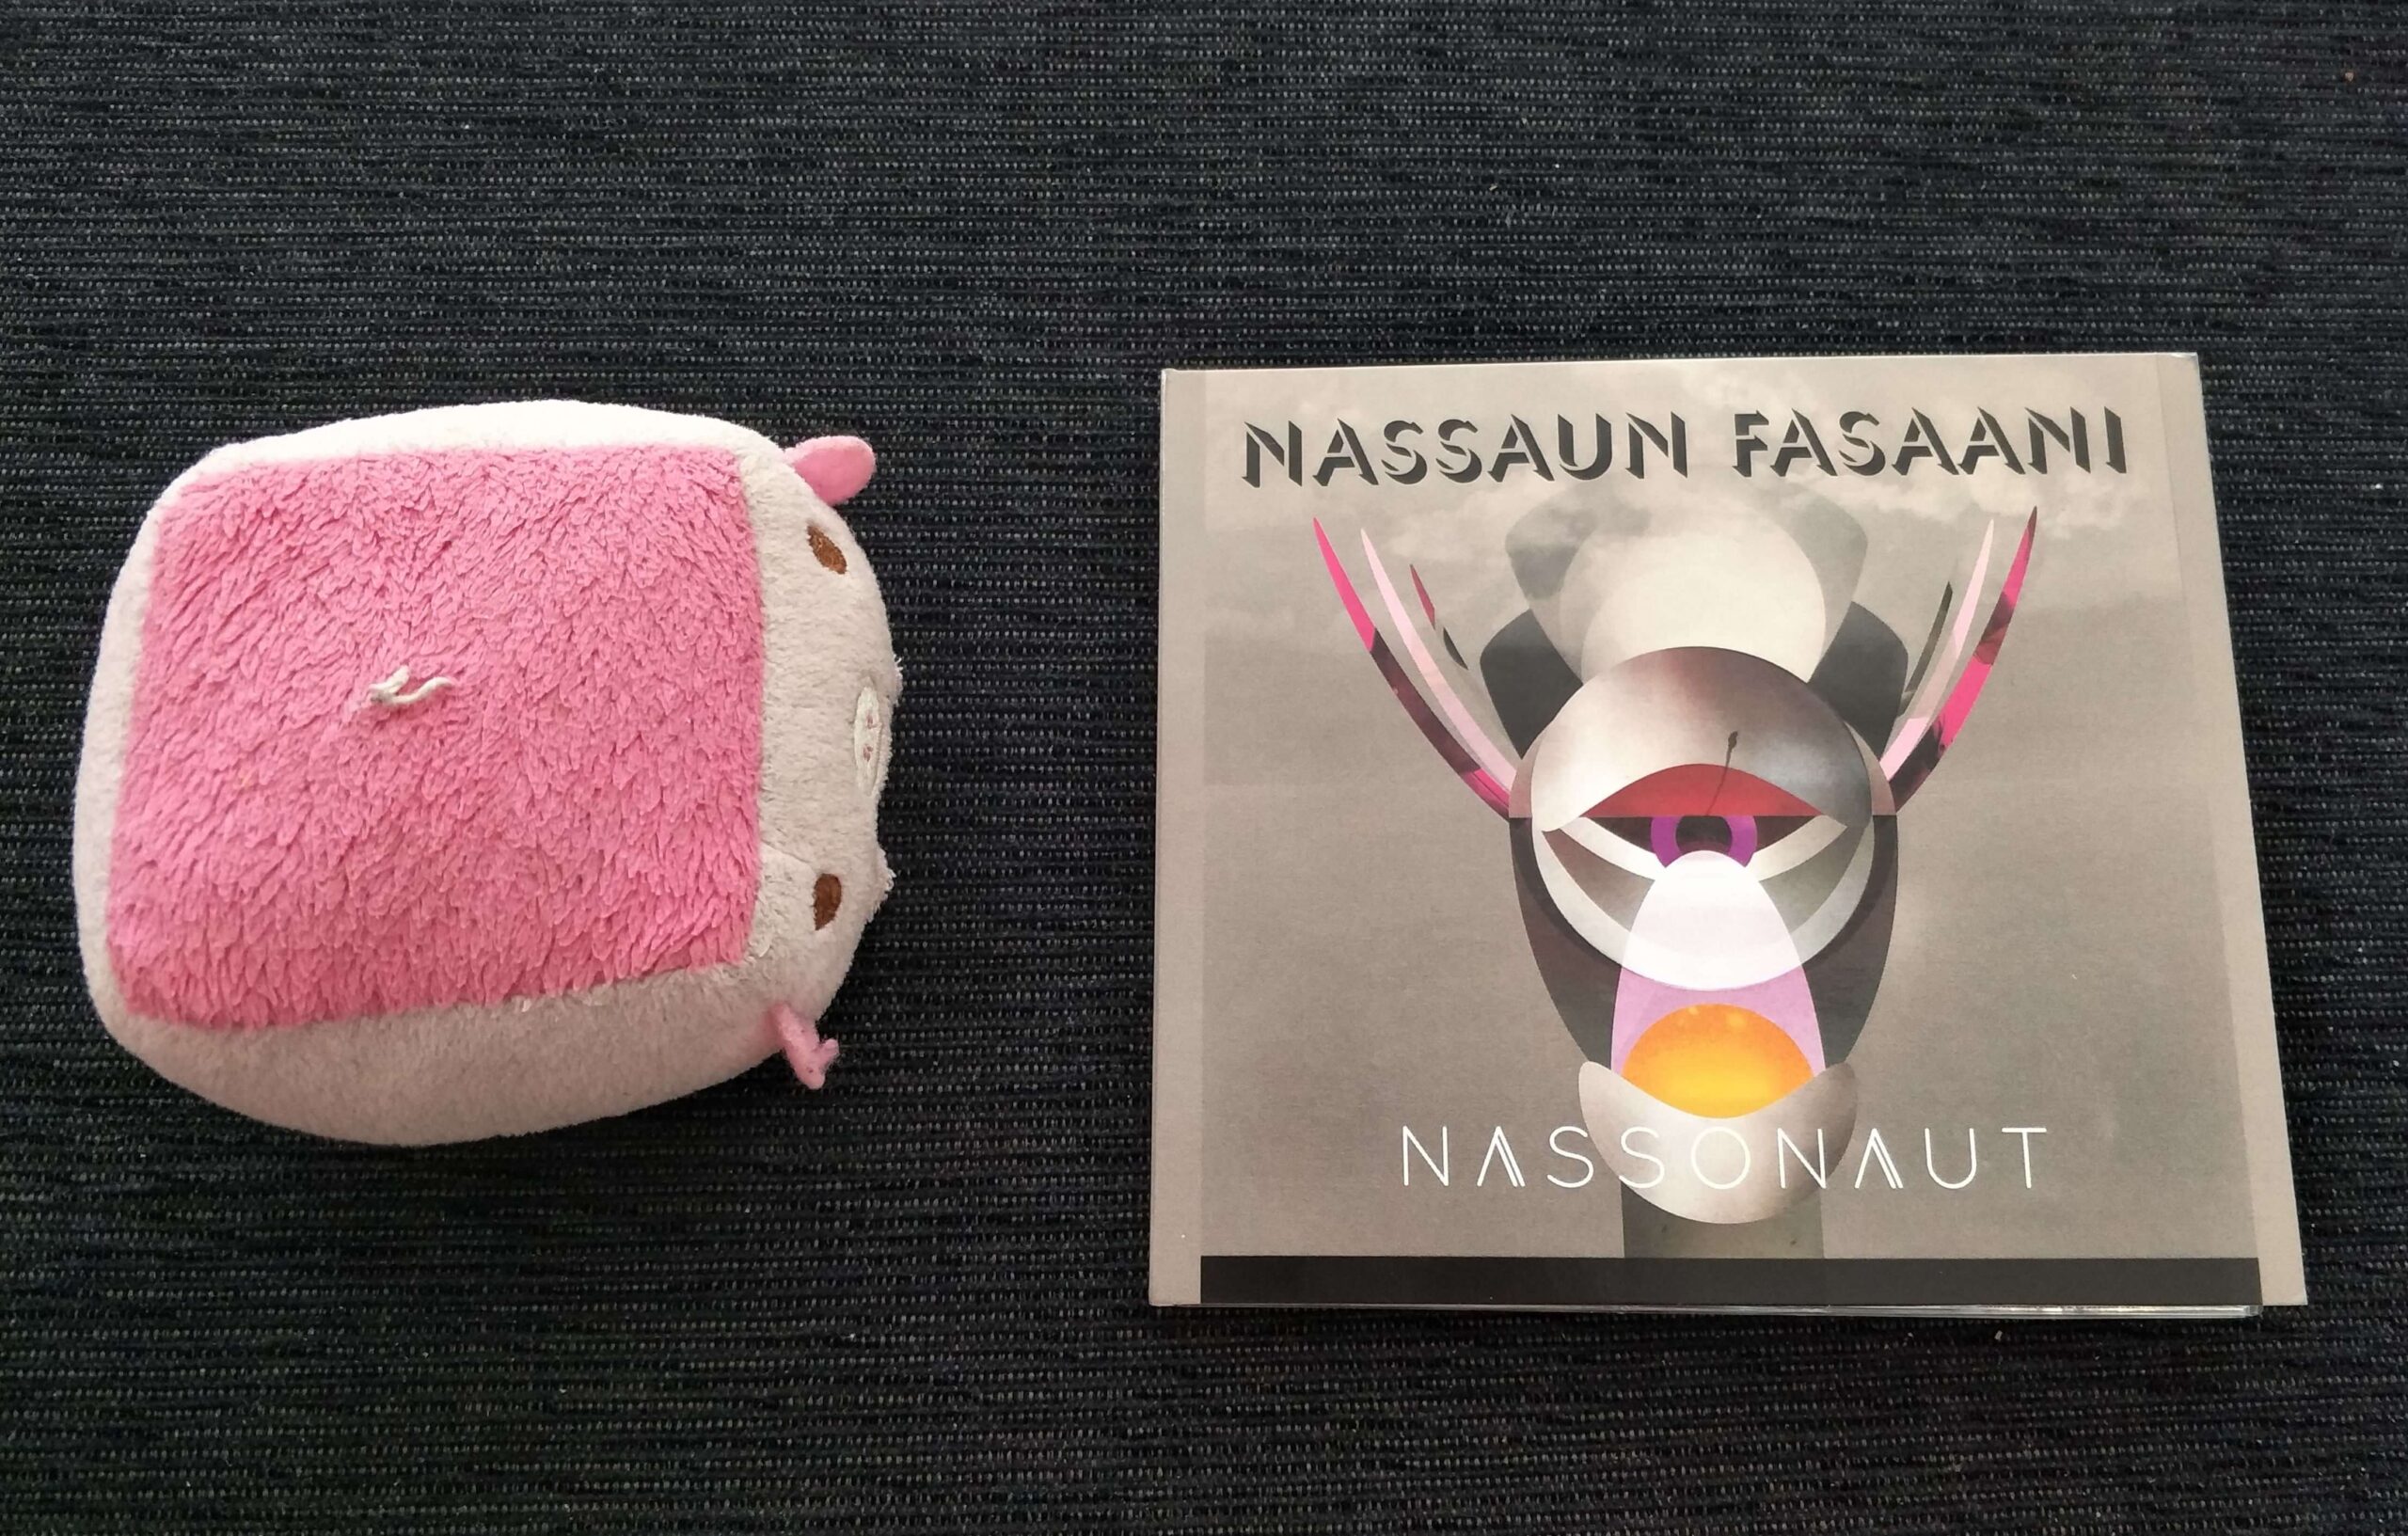 Nassaun Fasaani – Nassonaut